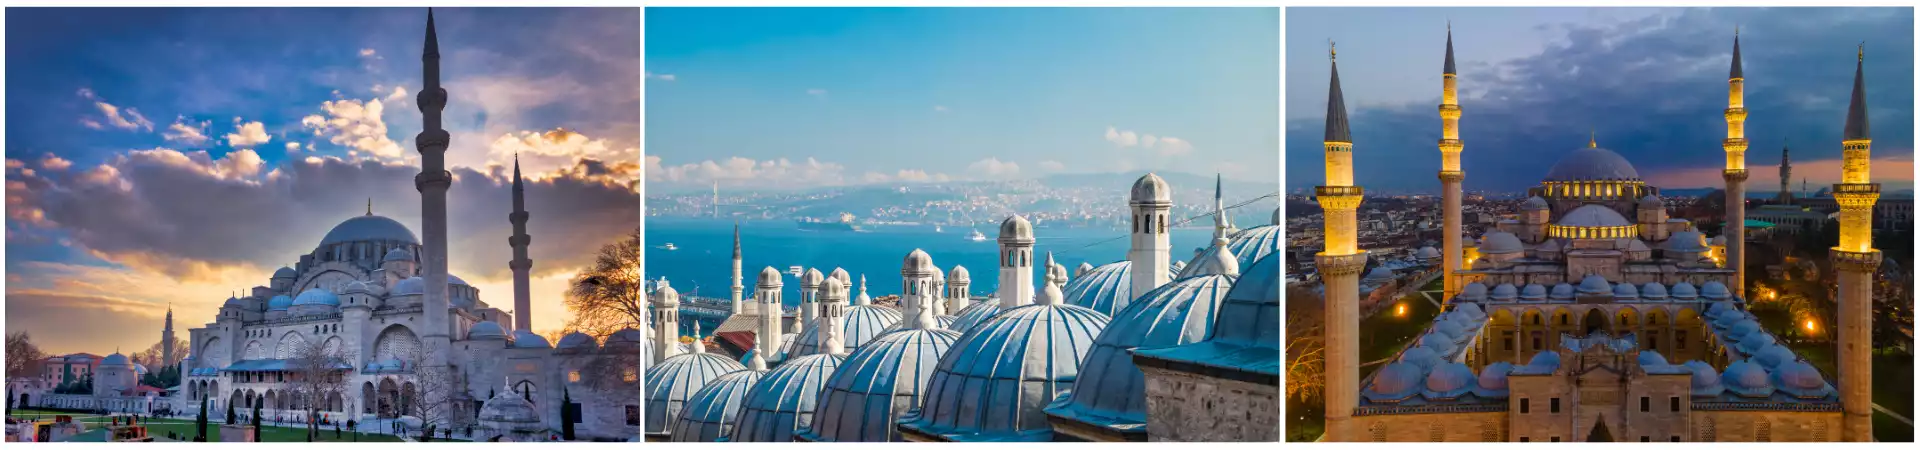 Suleymaniye Mosque Audio Guide Tour